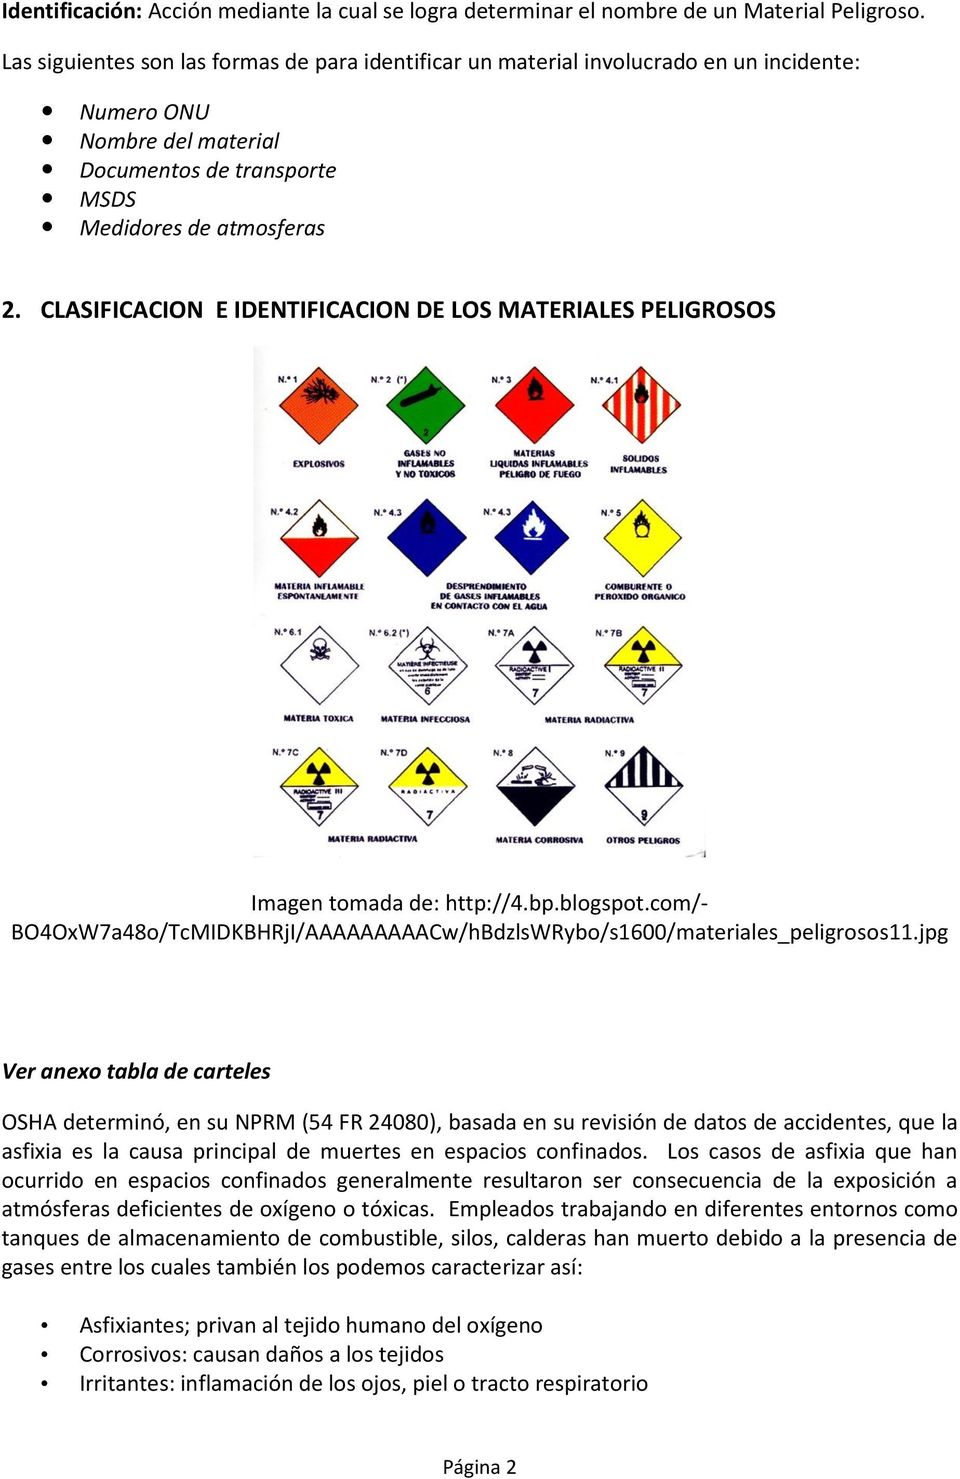 CLASIFICACION E IDENTIFICACION DE LOS MATERIALES PELIGROSOS Imagen tomada de: http://4.bp.blogspot.com/- BO4OxW7a48o/TcMIDKBHRjI/AAAAAAAAACw/hBdzlsWRybo/s1600/materiales_peligrosos11.